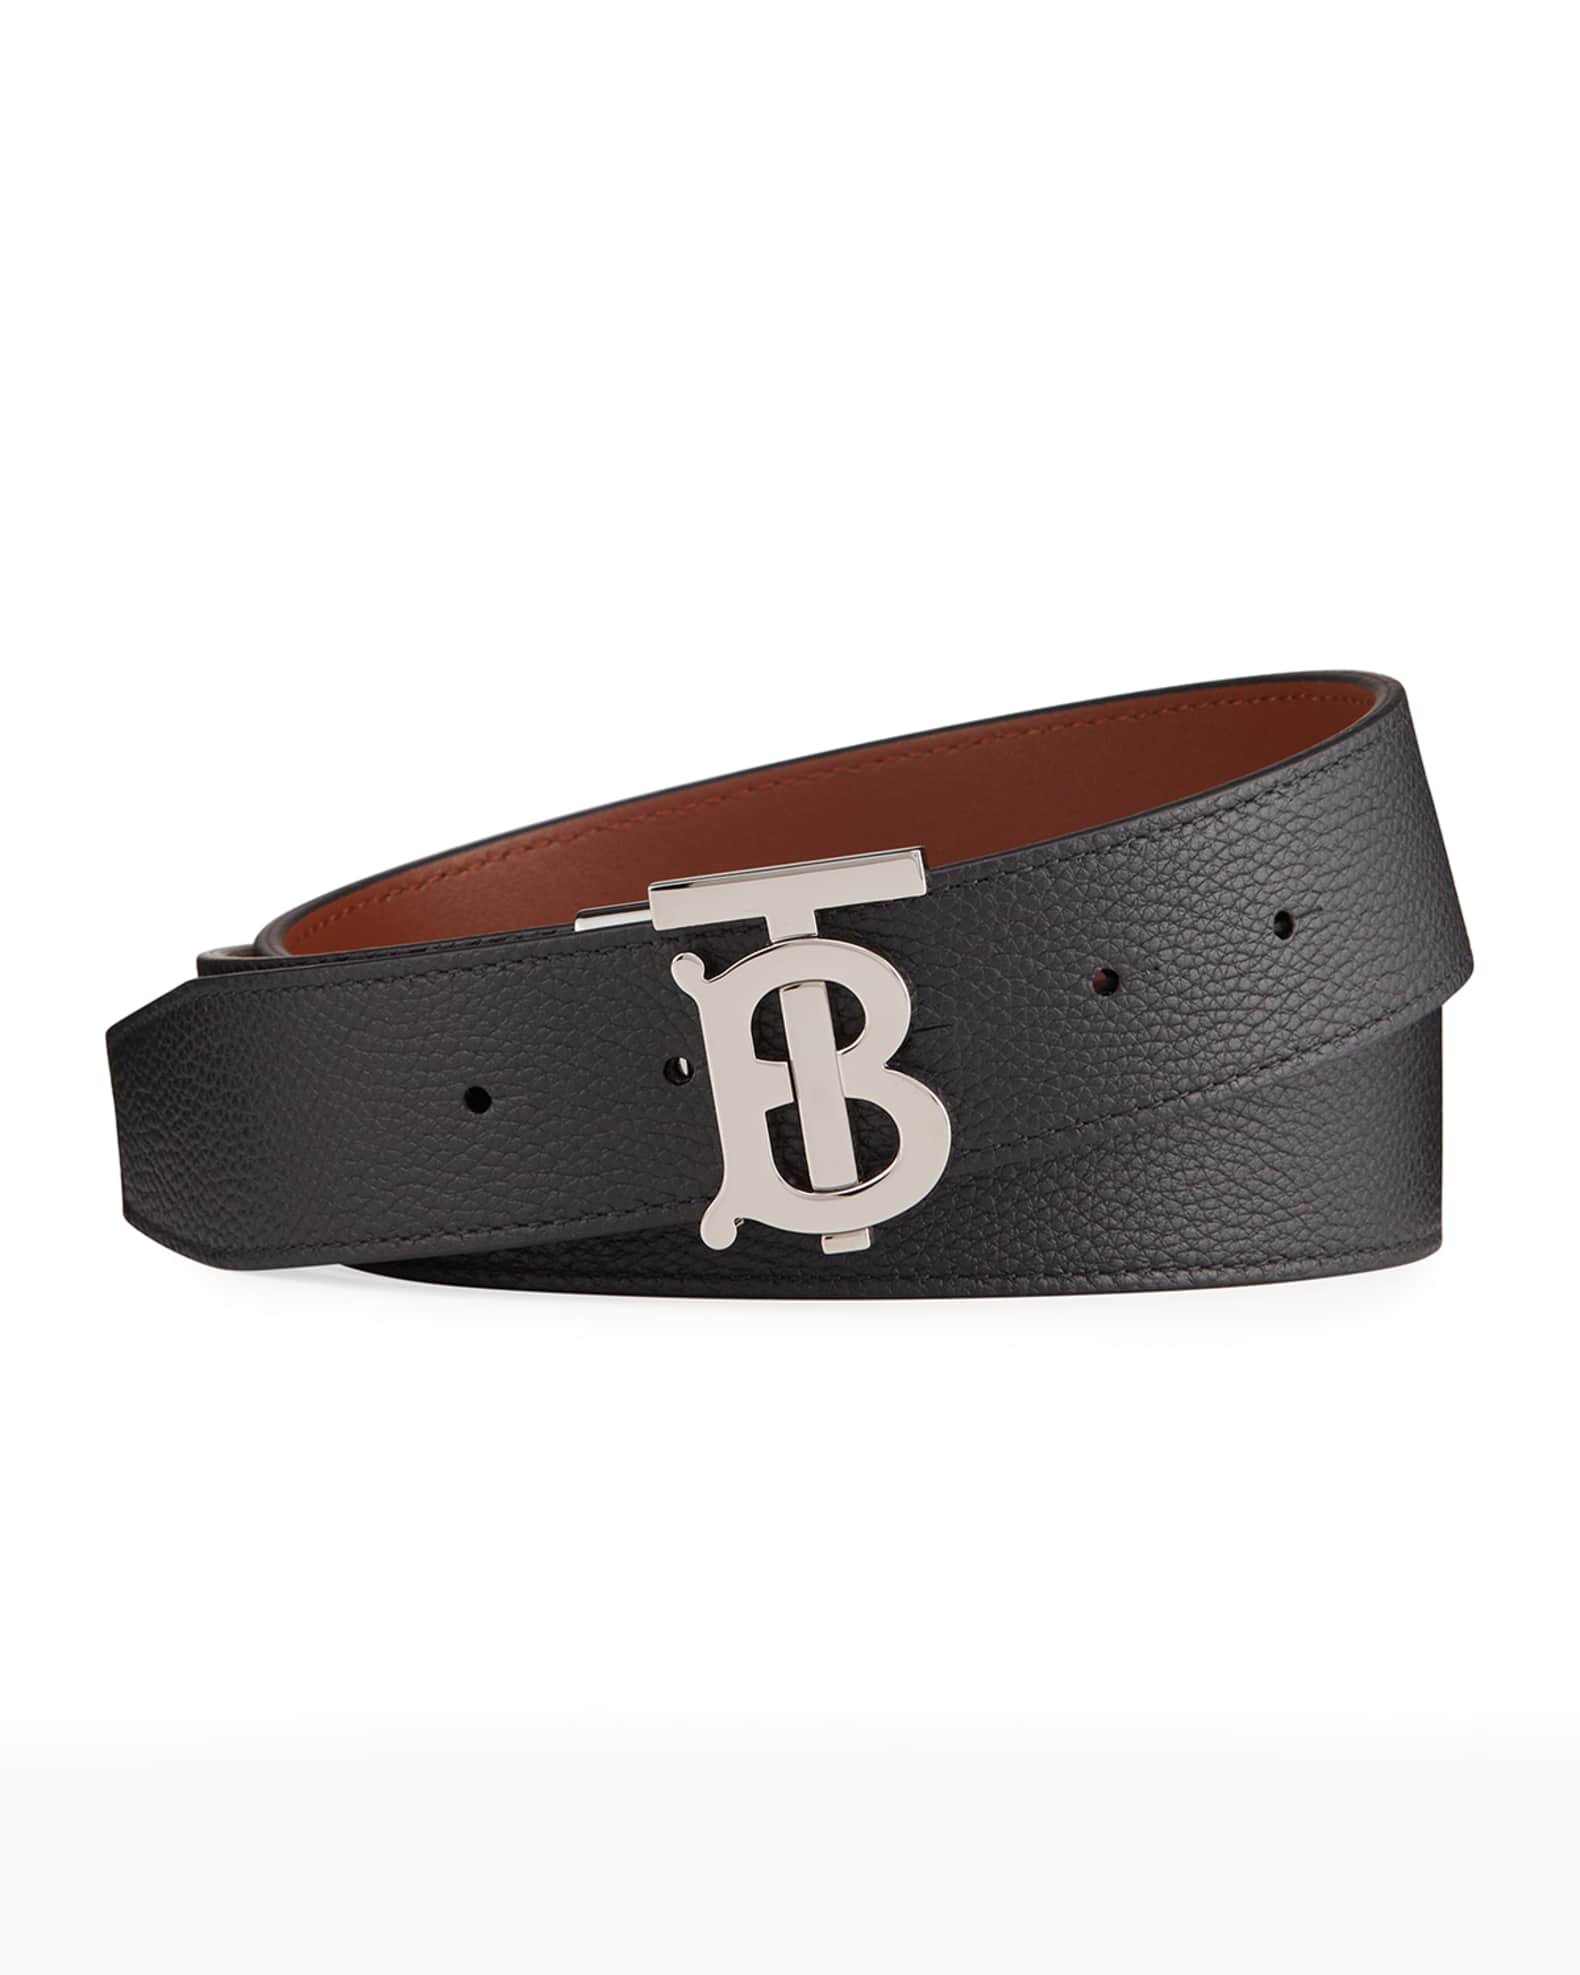 Burberry Women's Double B Buckle Leather Belt - Black - Size Large